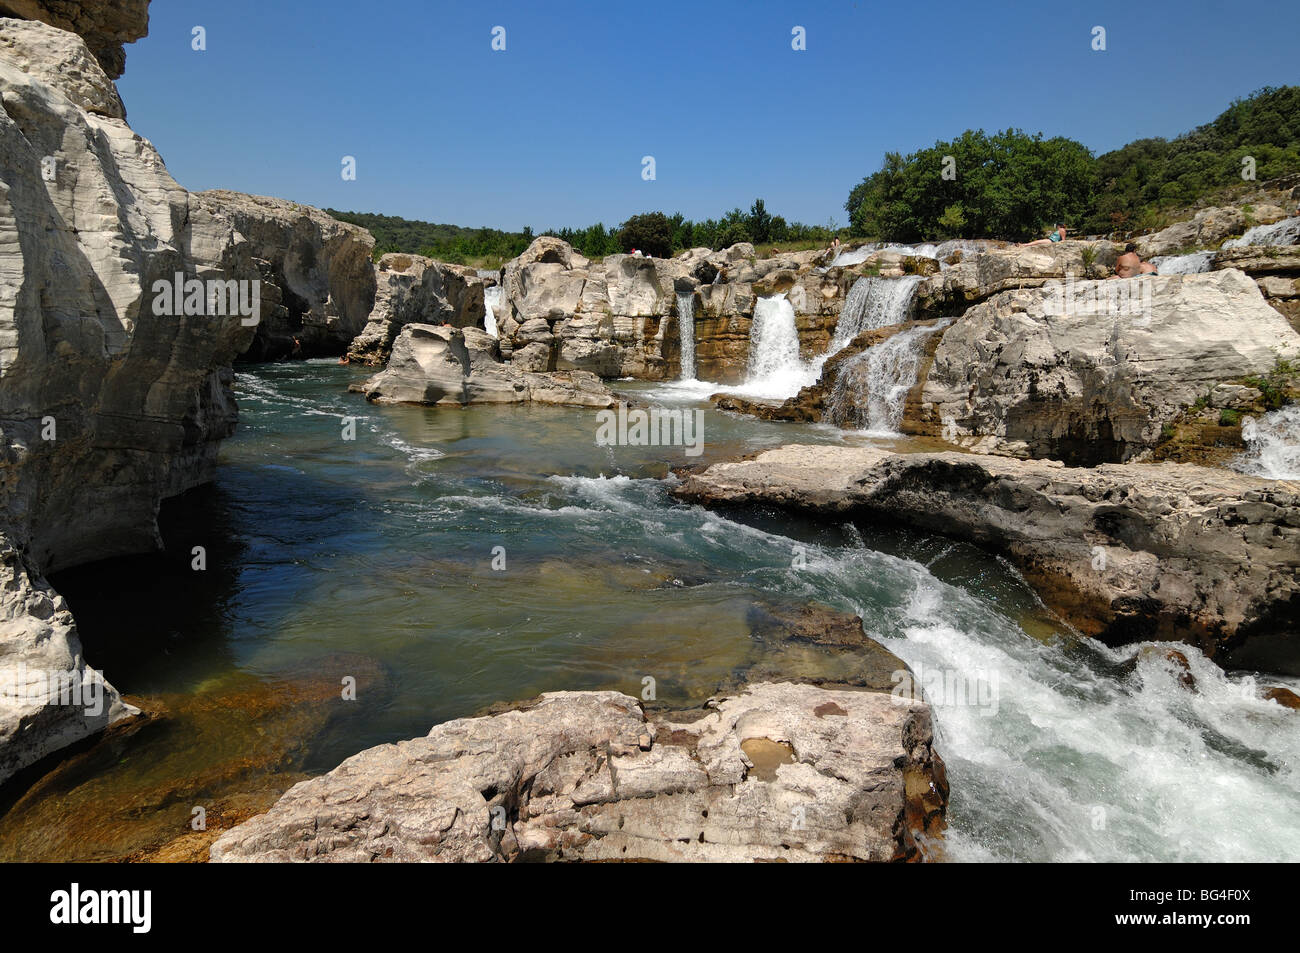 Wasserfall oder Kaskaden von Sautadet am Fluss Cèze, La Roque Sur Cèze, Gard, Languedoc Roussillon, Frankreich Stockfoto